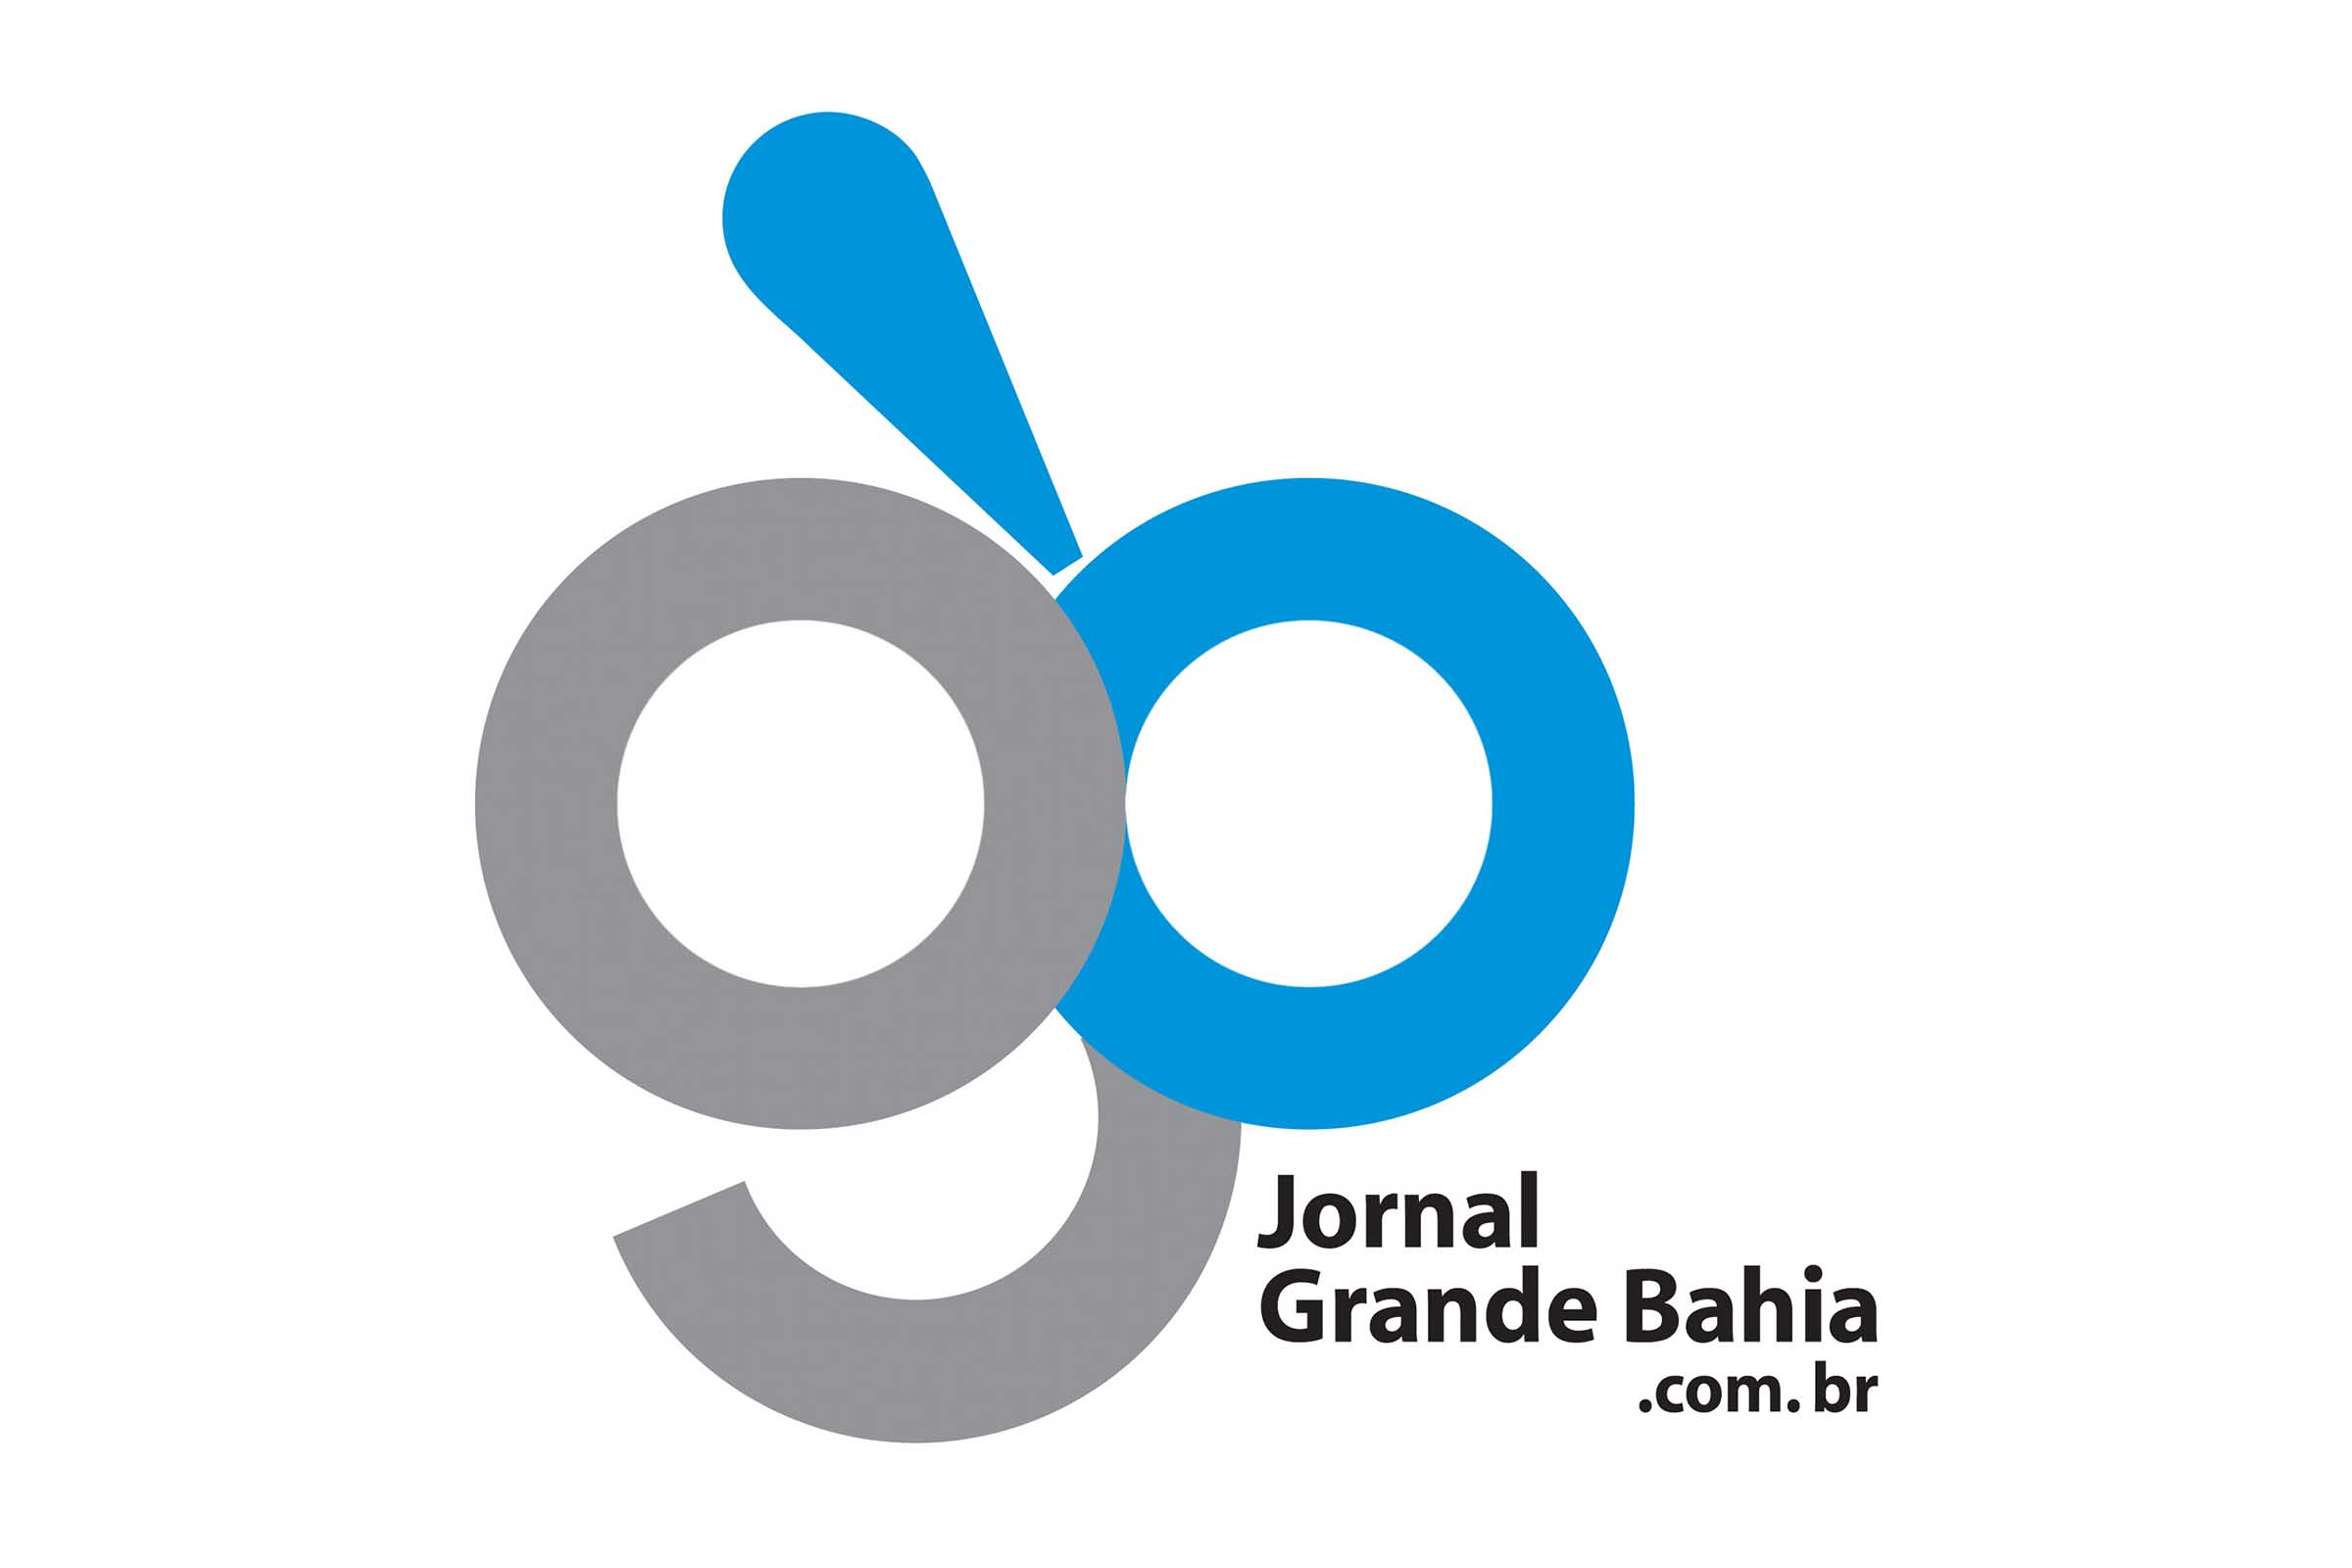 Jornal Grande Bahia compromisso em informar.